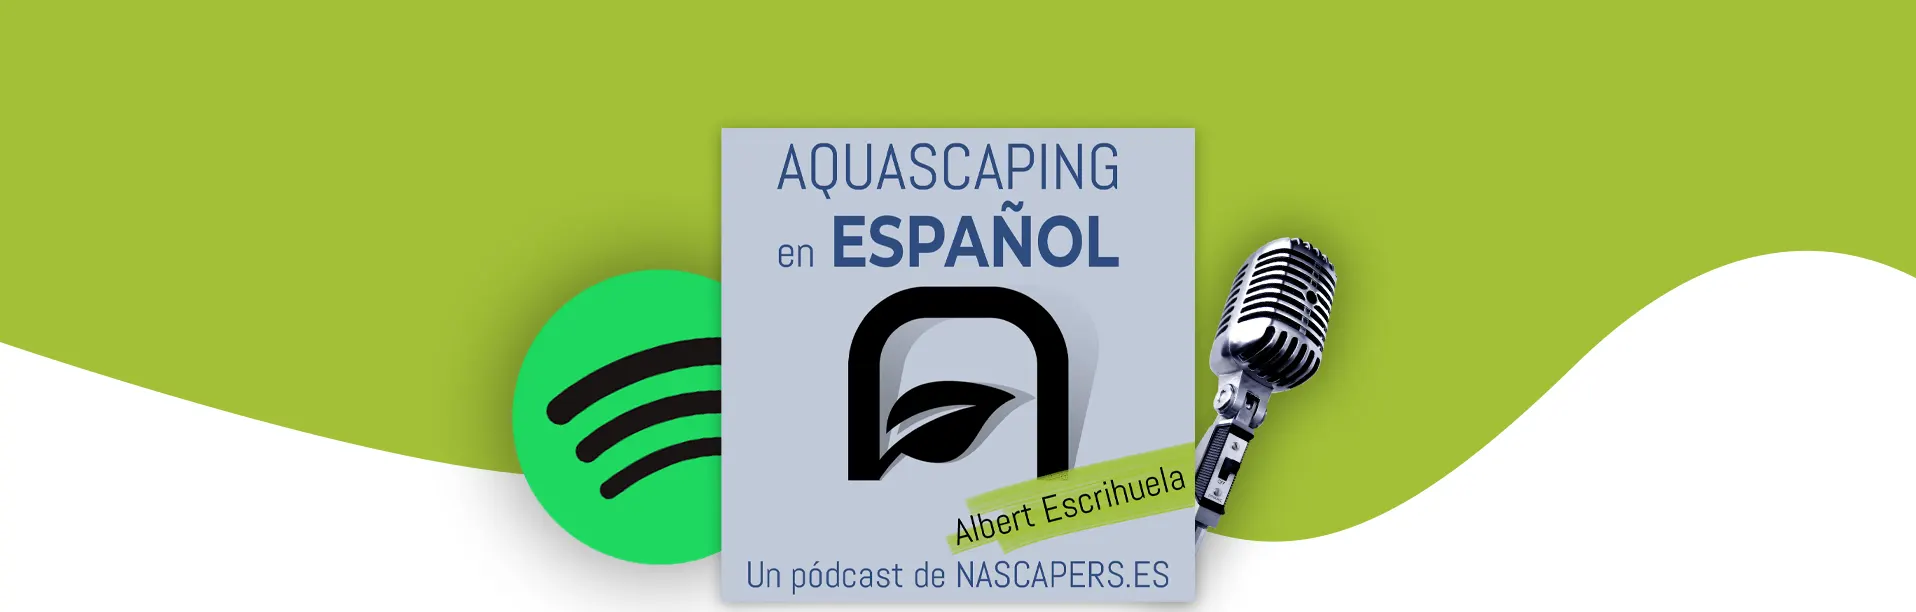 Pódcast de aquascaping en español, el pódcast de nascapers creado por Albert Escrihuela